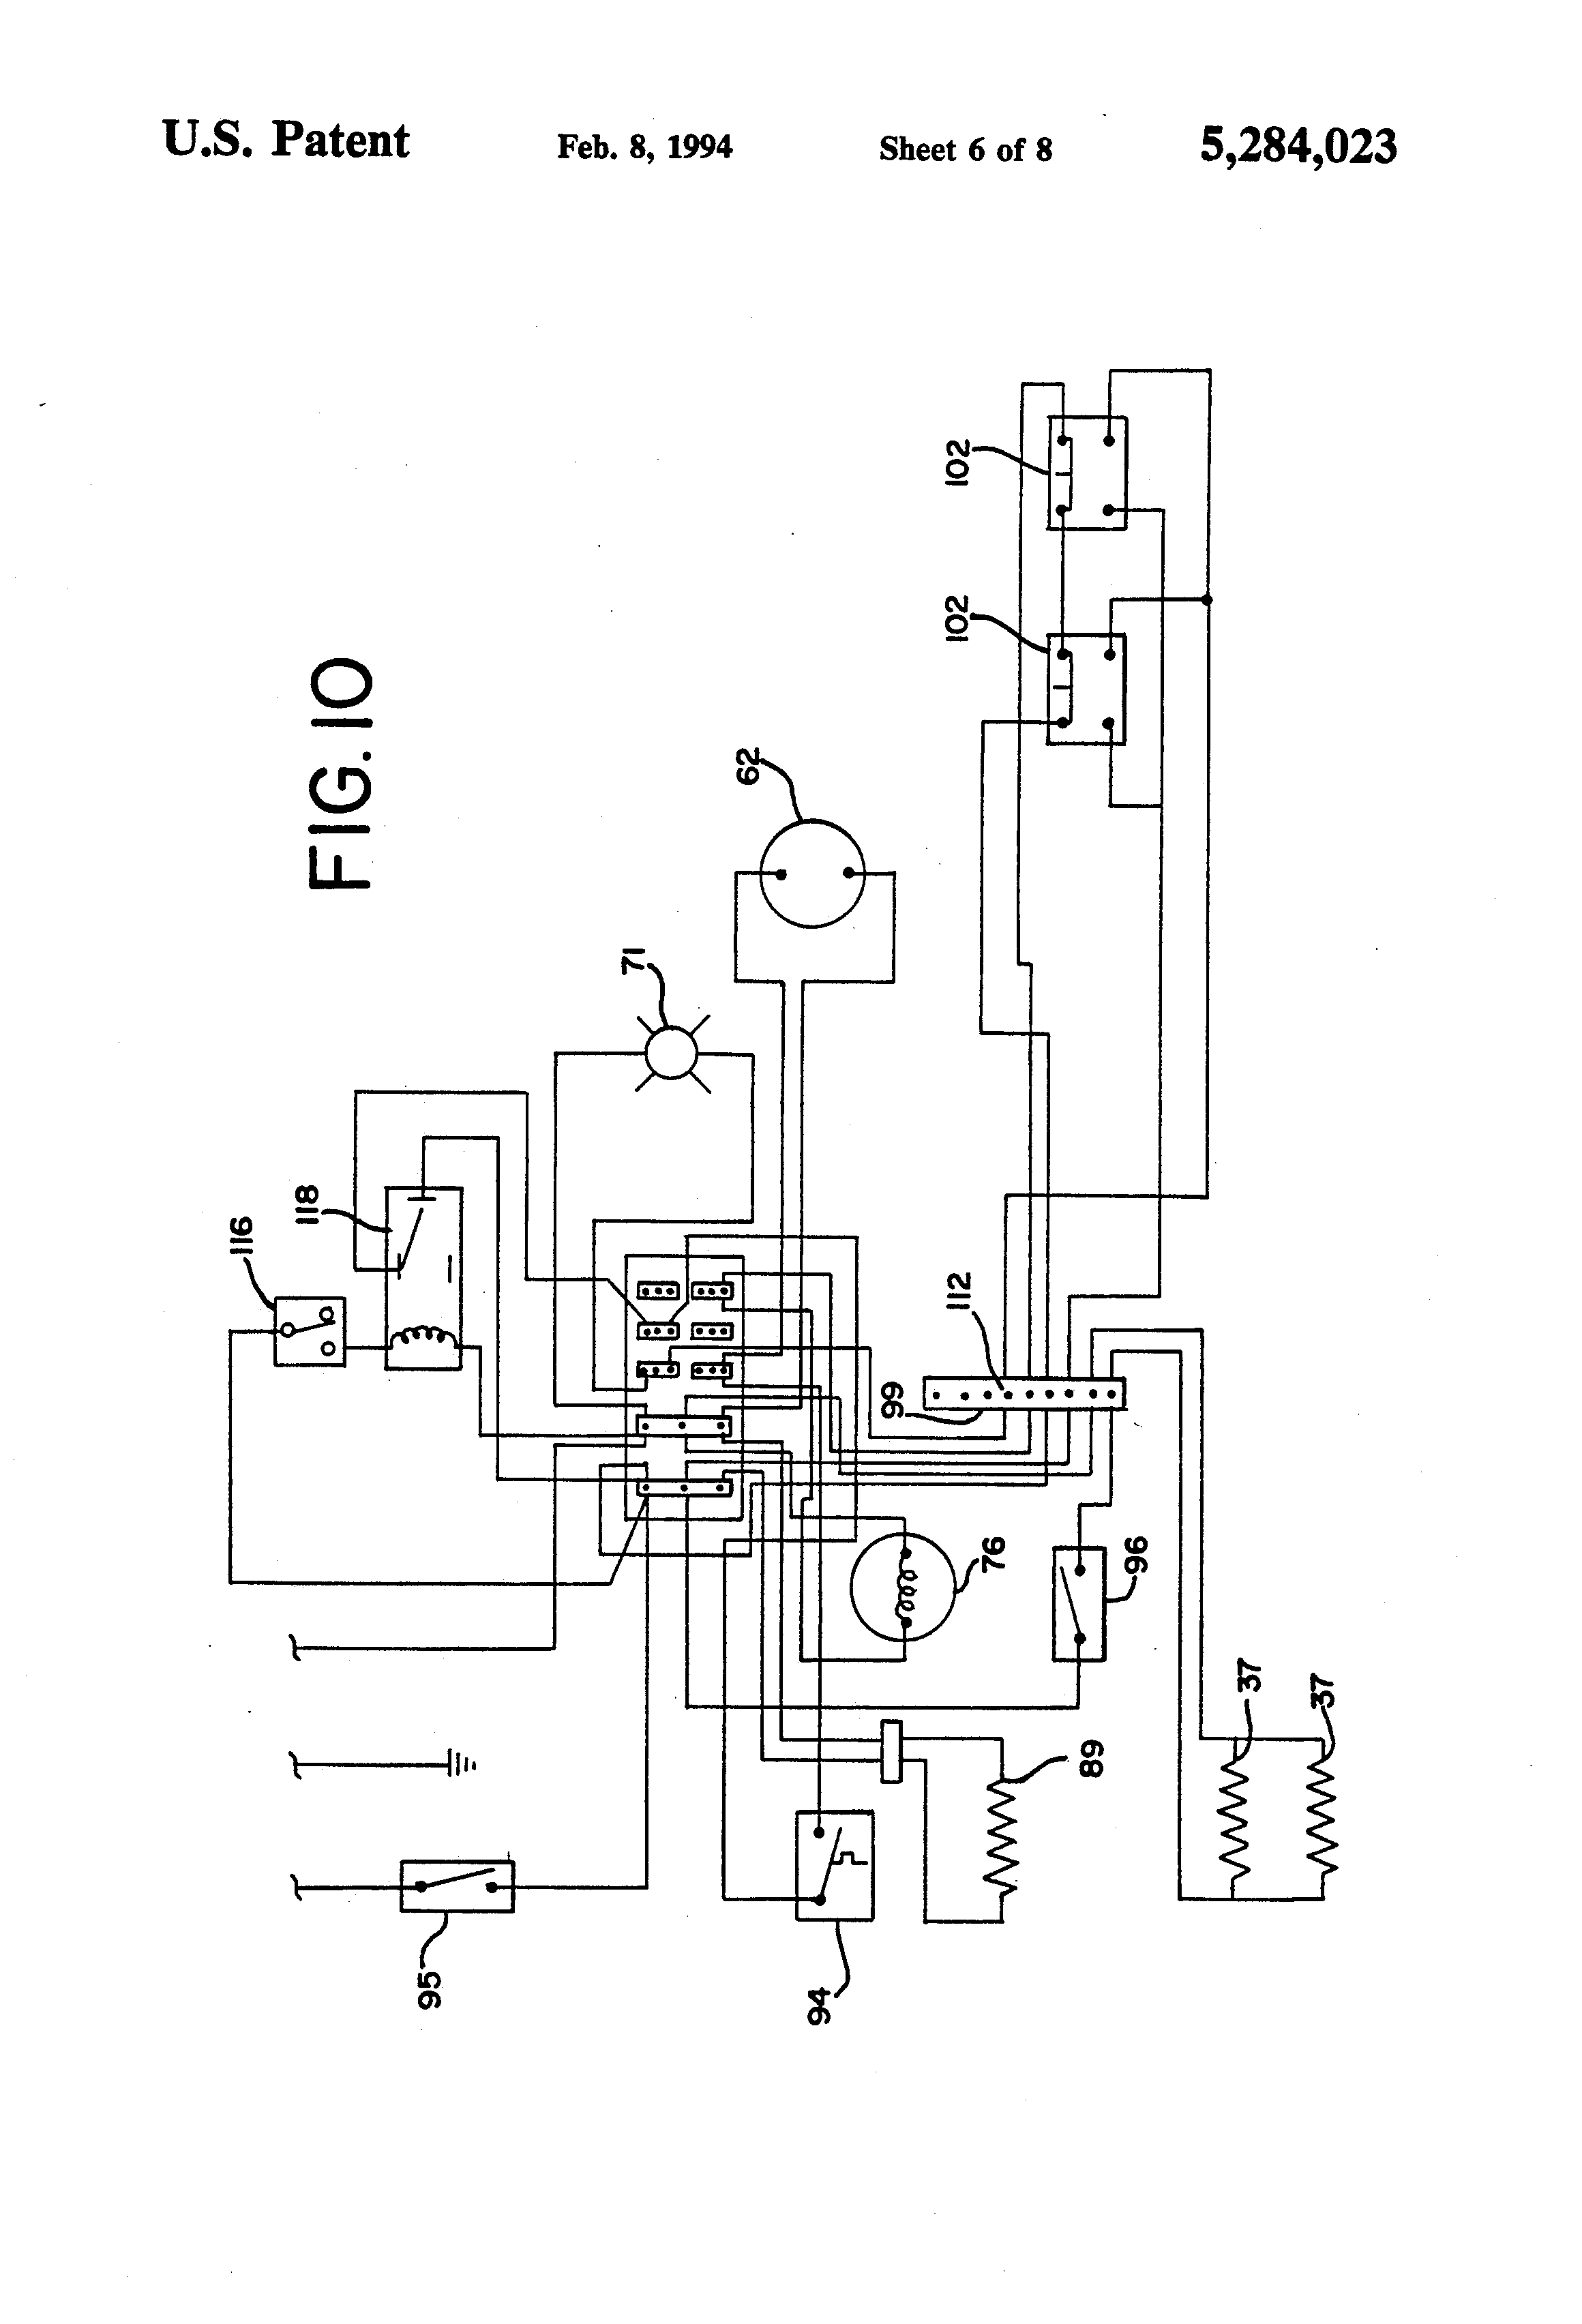 heatcraft unit cooler wiring diagram